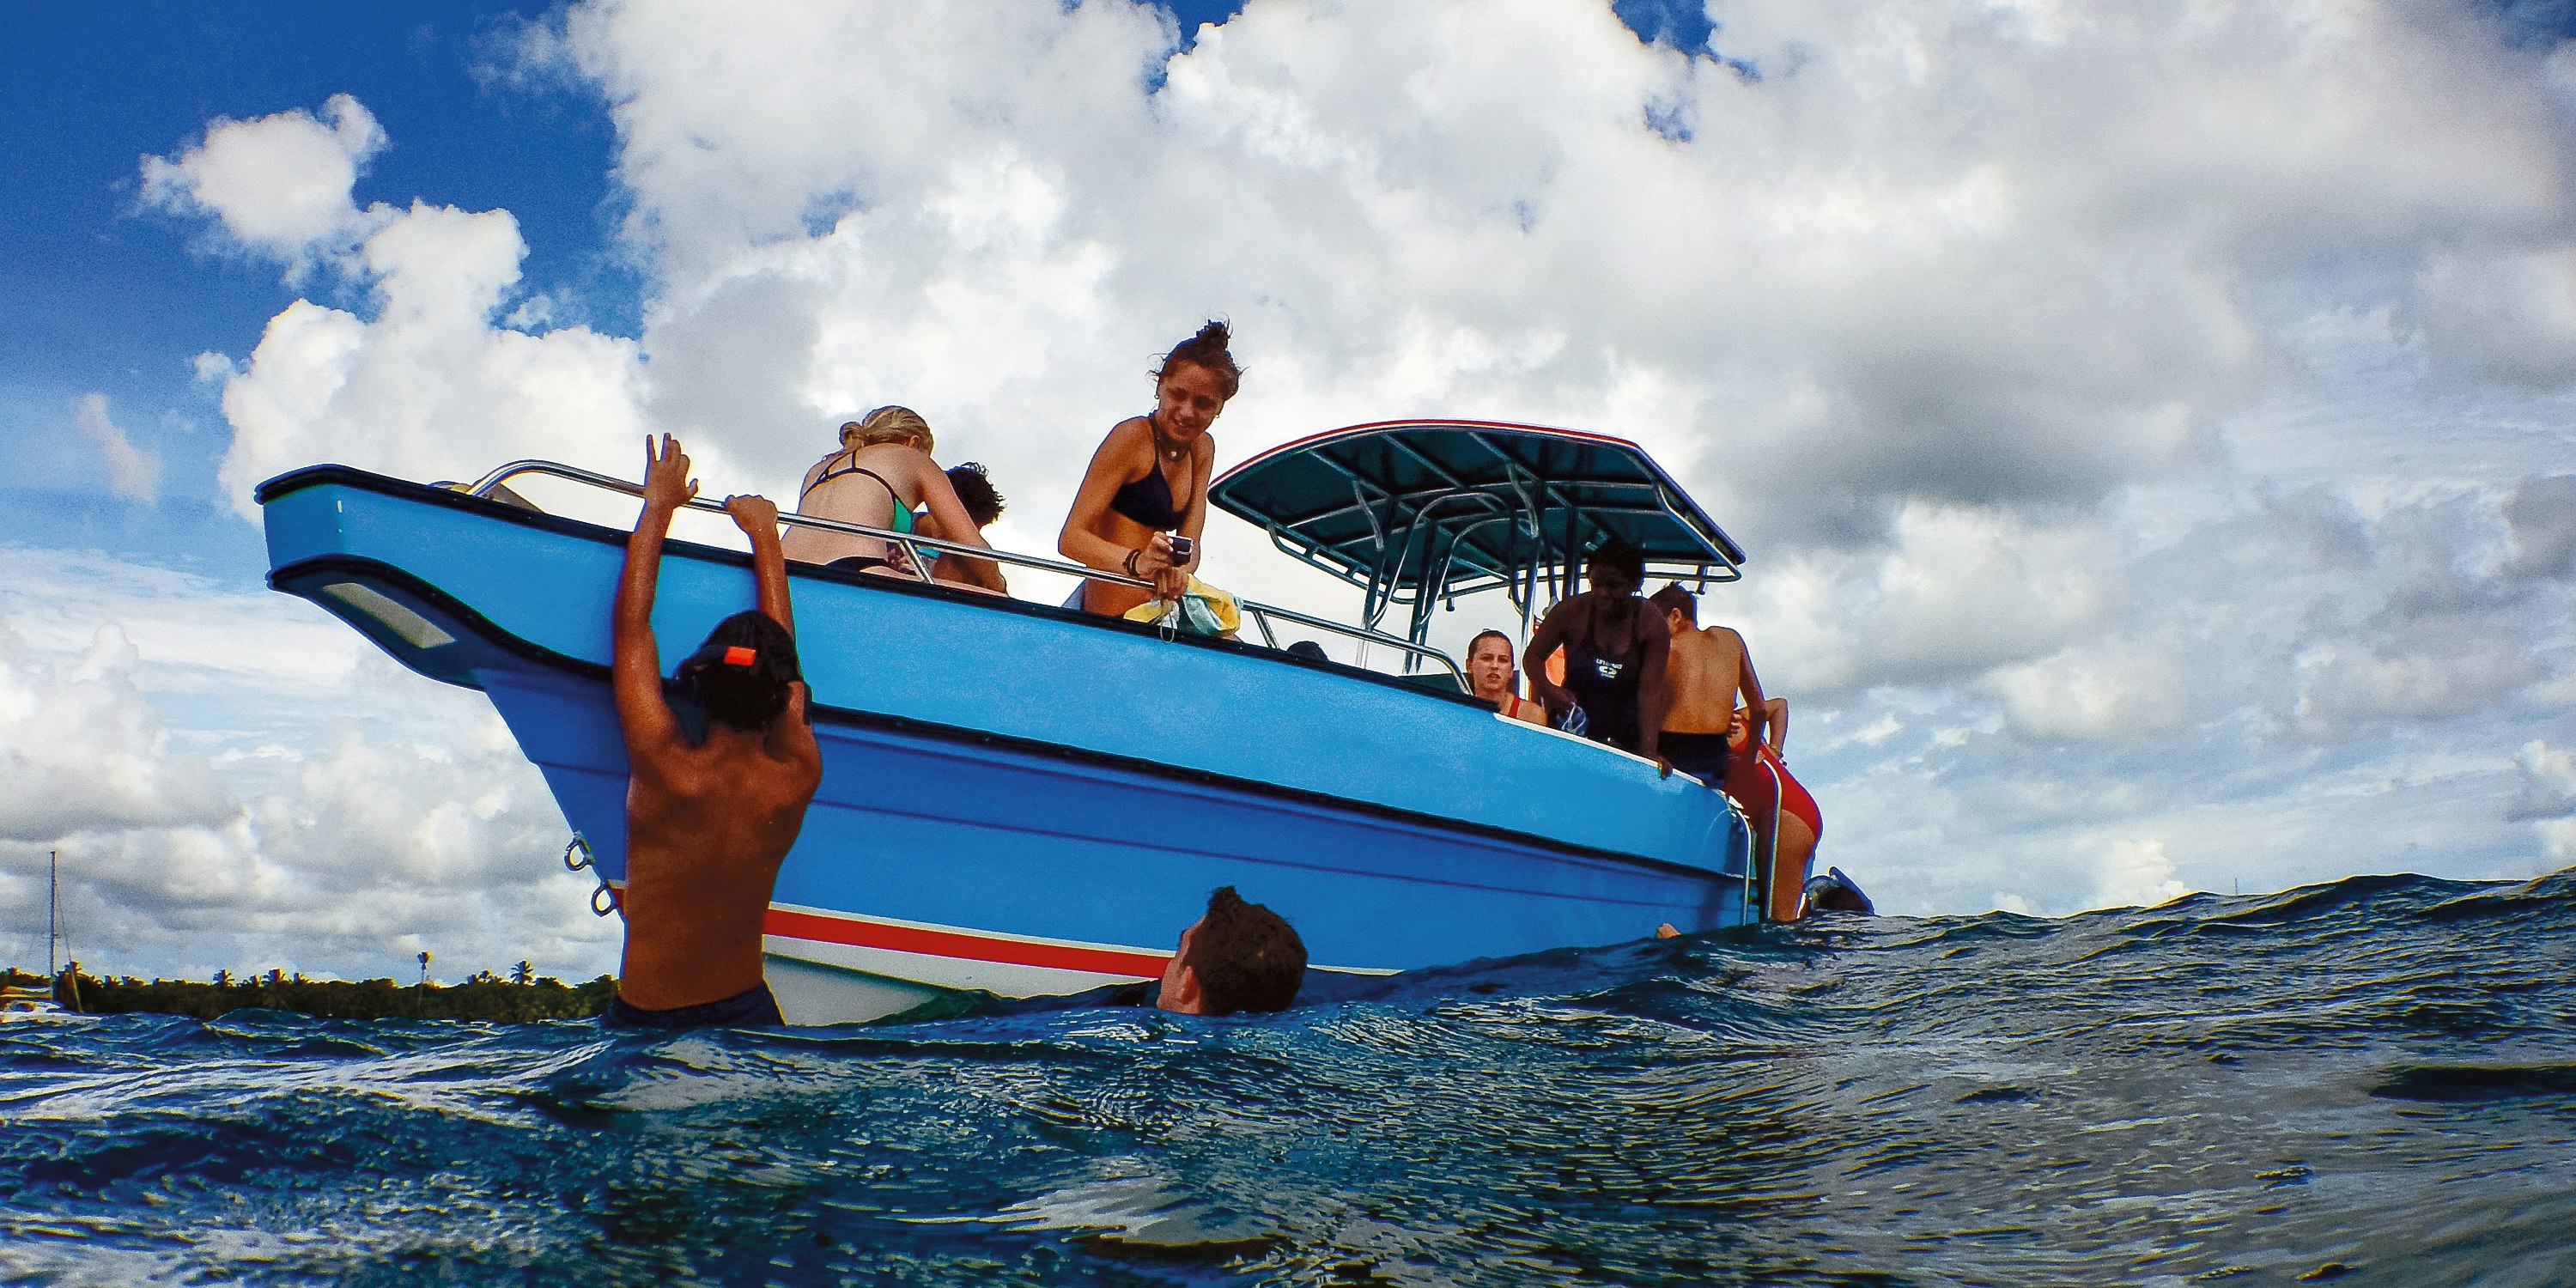 Dominican Republic: Marine Life and Coastal Restoration